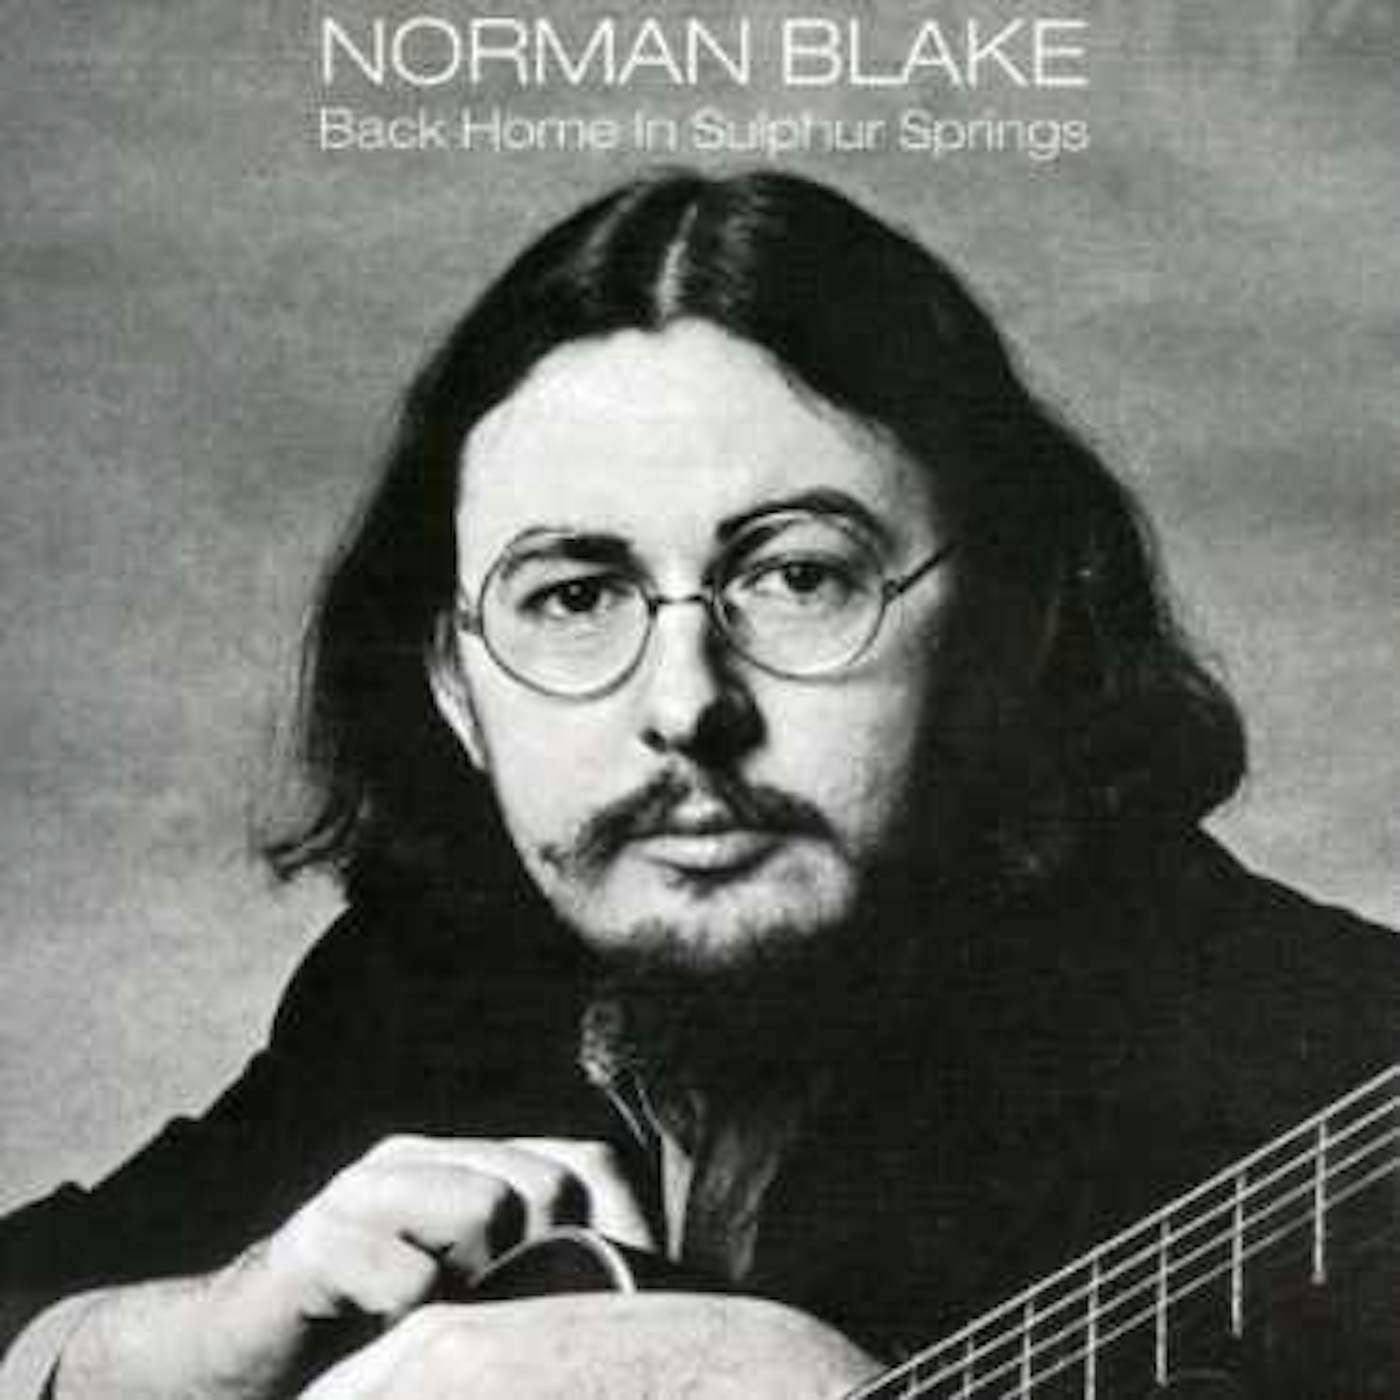 Norman Blake BACK HOME IN SULPHUR SPRINGS CD